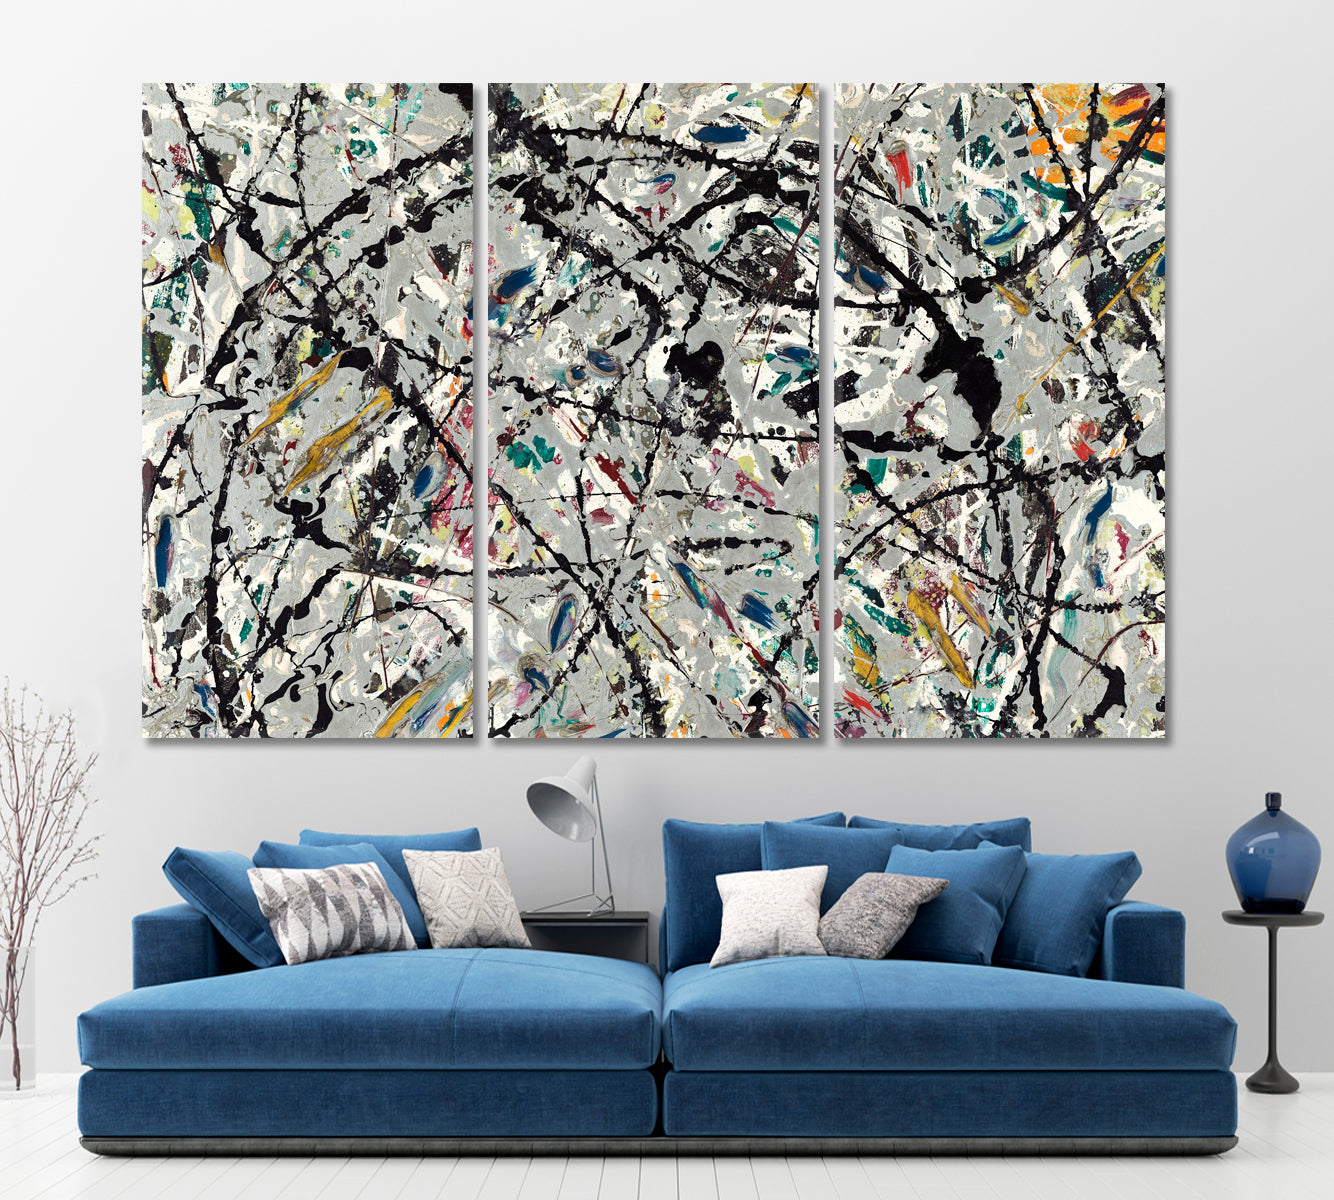 MODERN DRIP ART Jackson Pollock Motives Famous Splatter Artwork Contemporary Art Artesty 3 panels 36" x 24" 